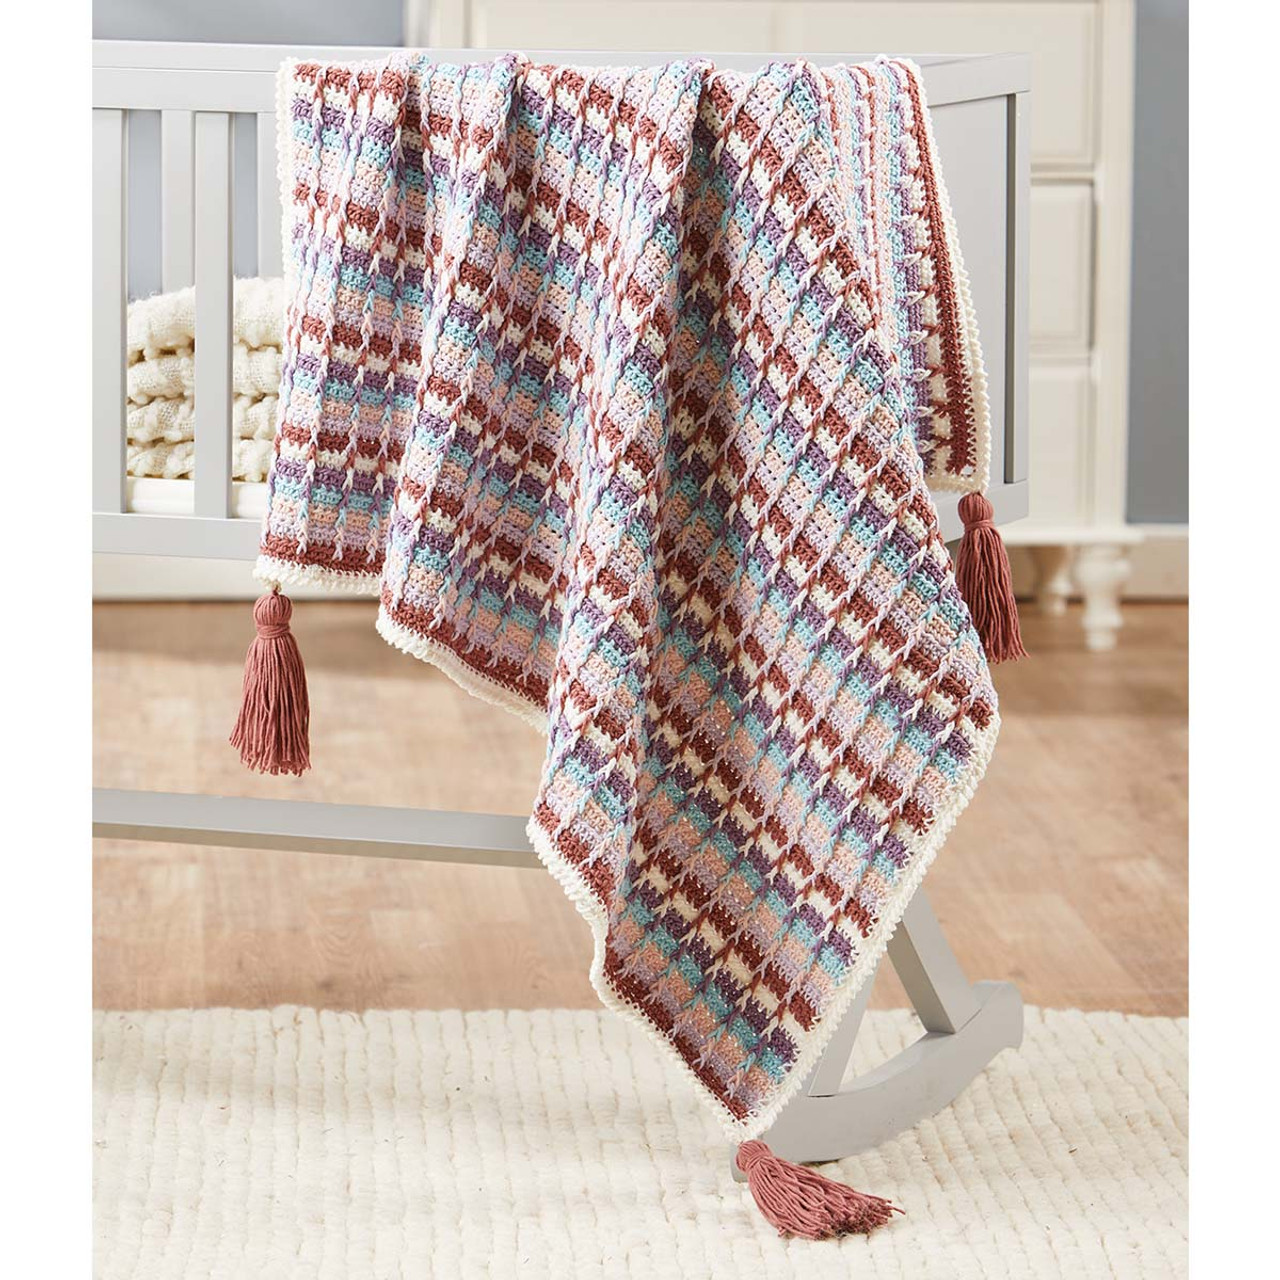 Herrschners Going in Circles Baby Blanket Crochet Yarn Kit